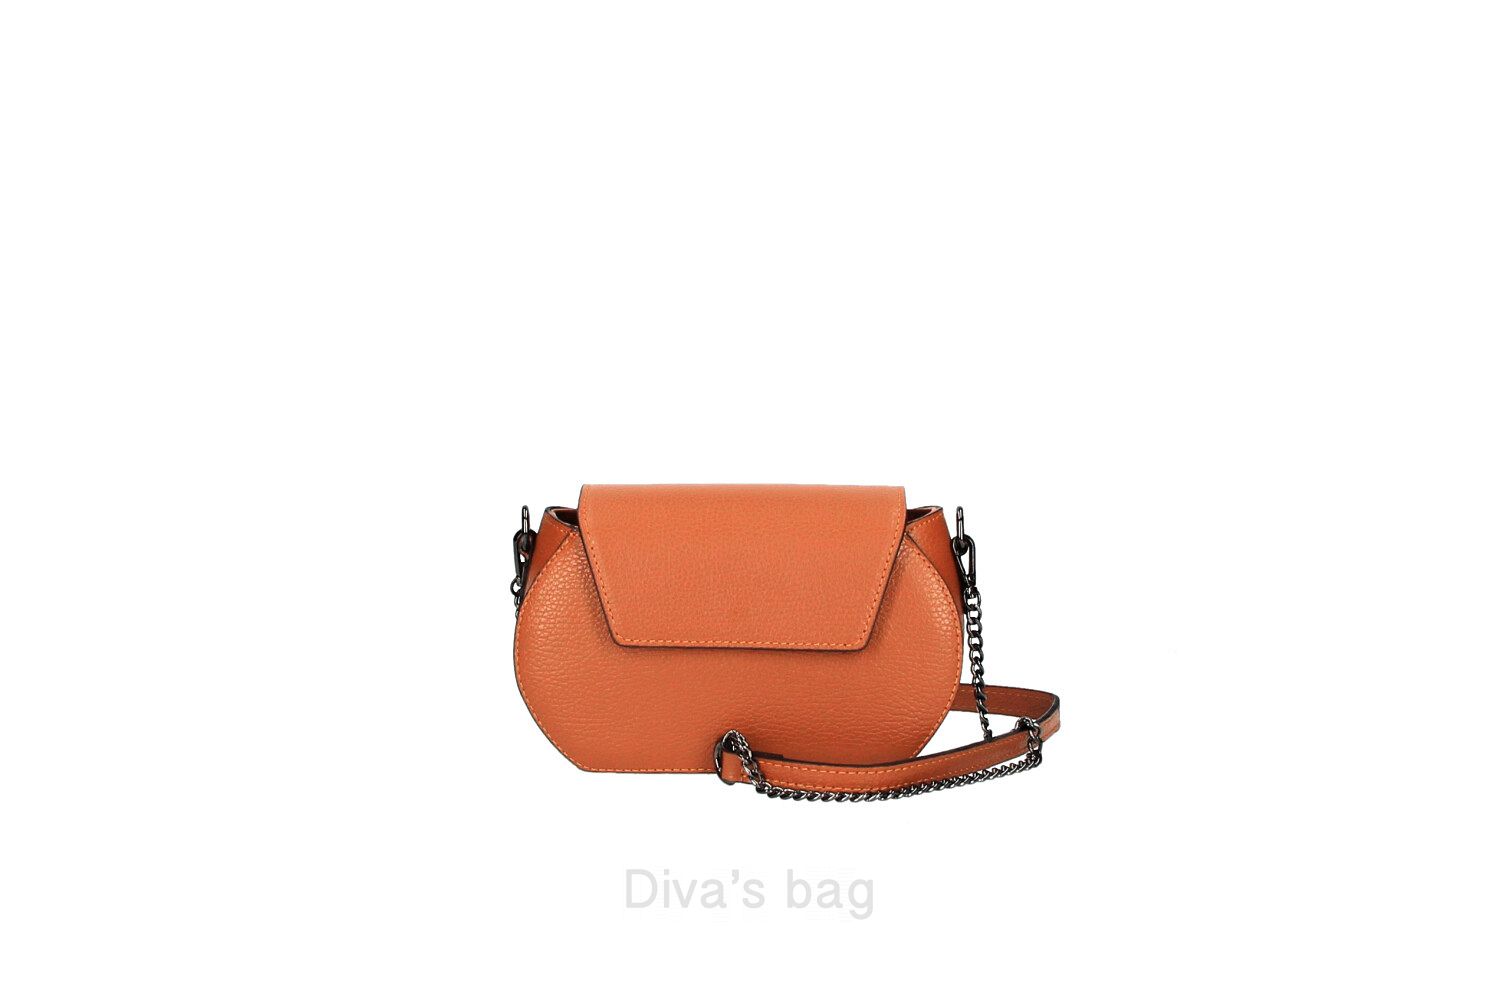 Atena - Genuine Leather Handbag